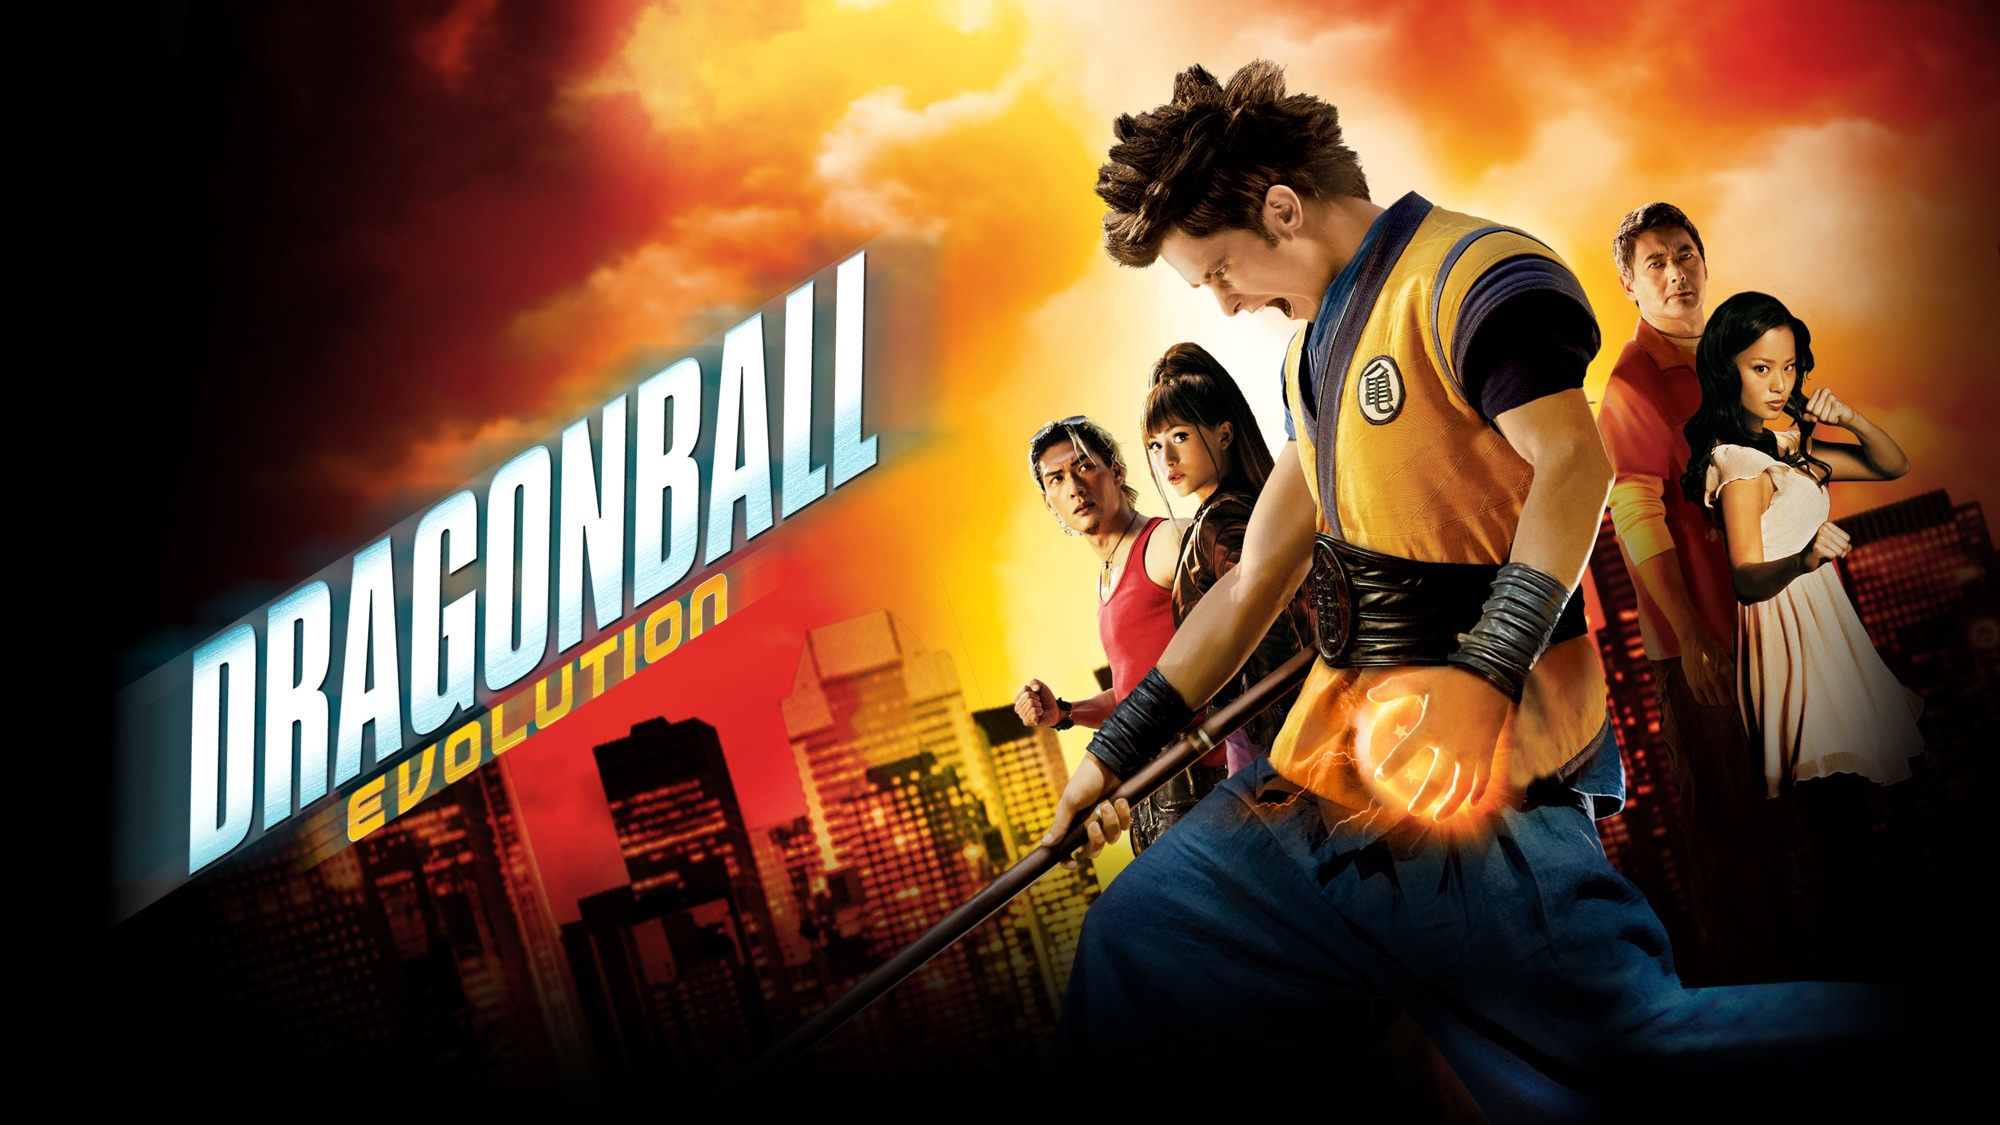 download dragonball evolution full movie